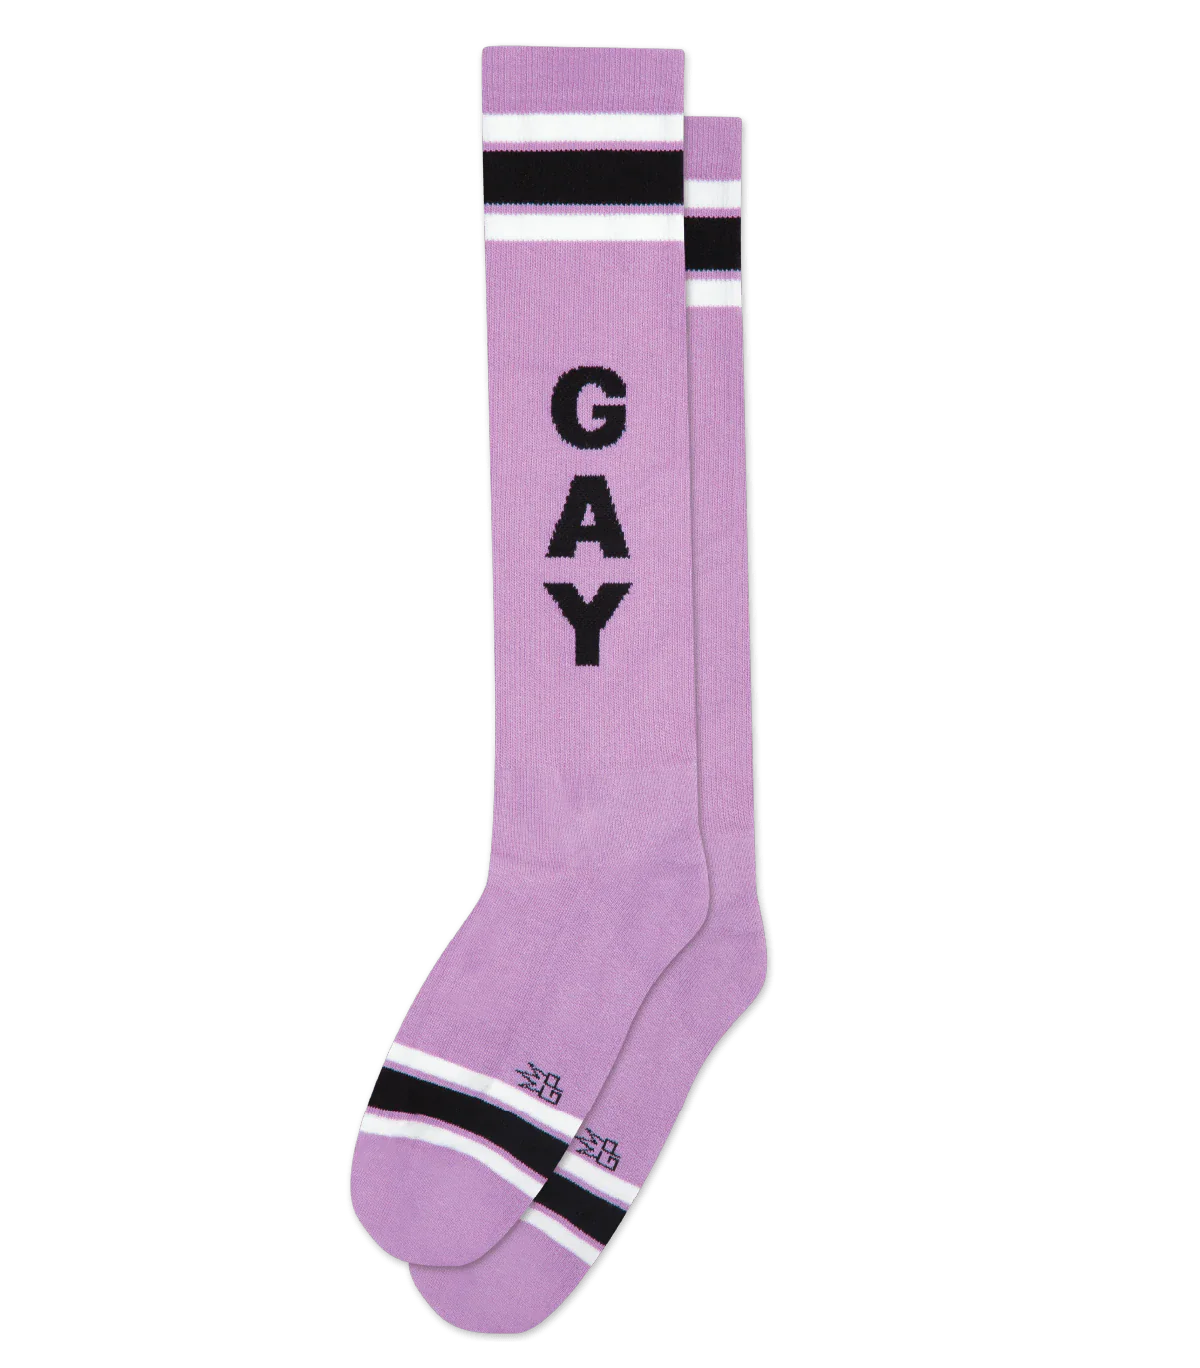 GAY KNEE HIGH SOCKS - DealByEthan.gay